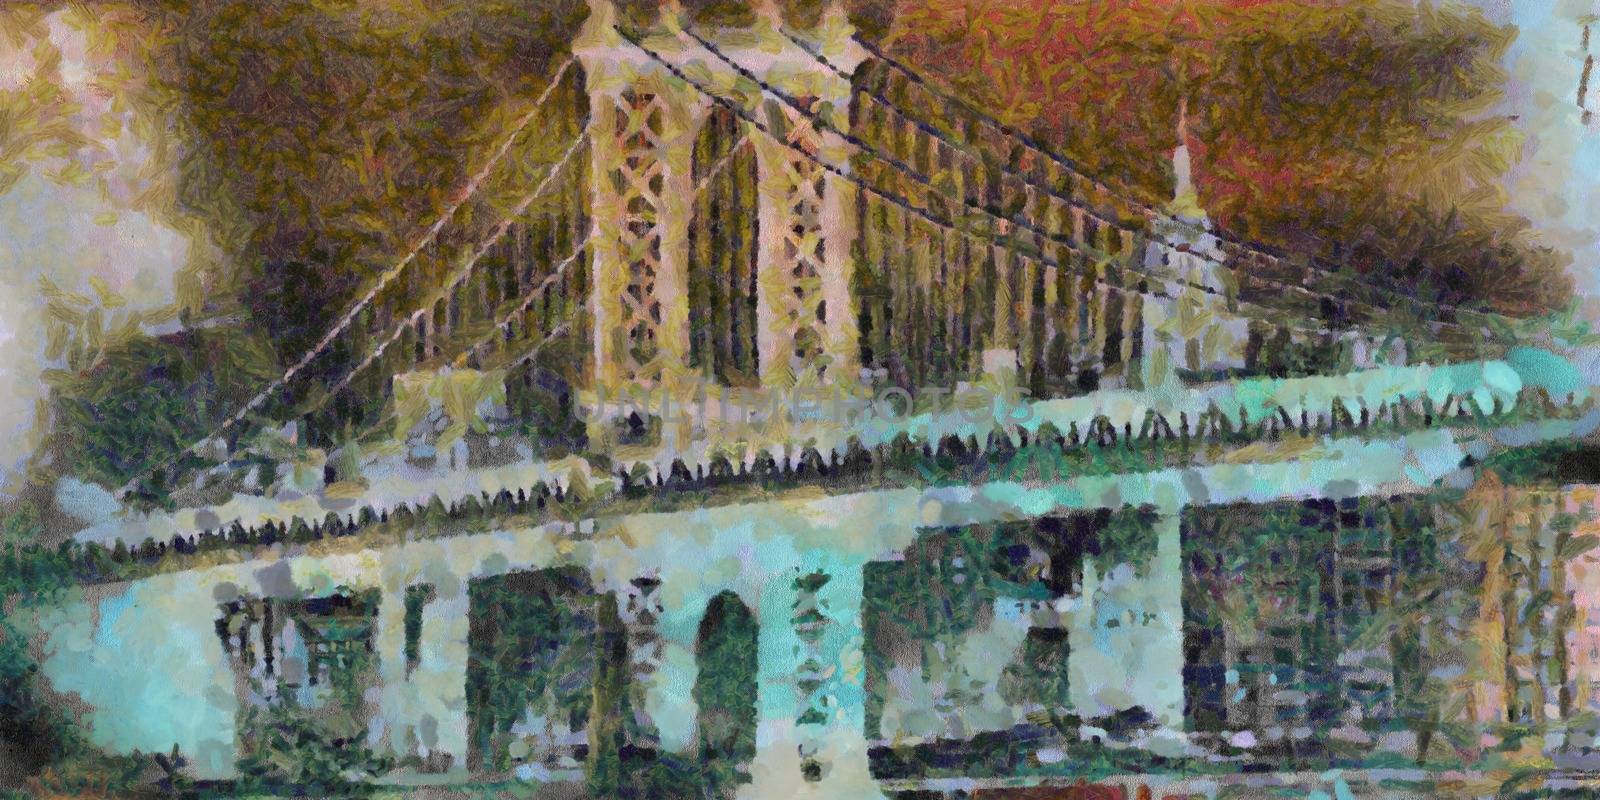 Manhattan bridge painting. 3D rendering